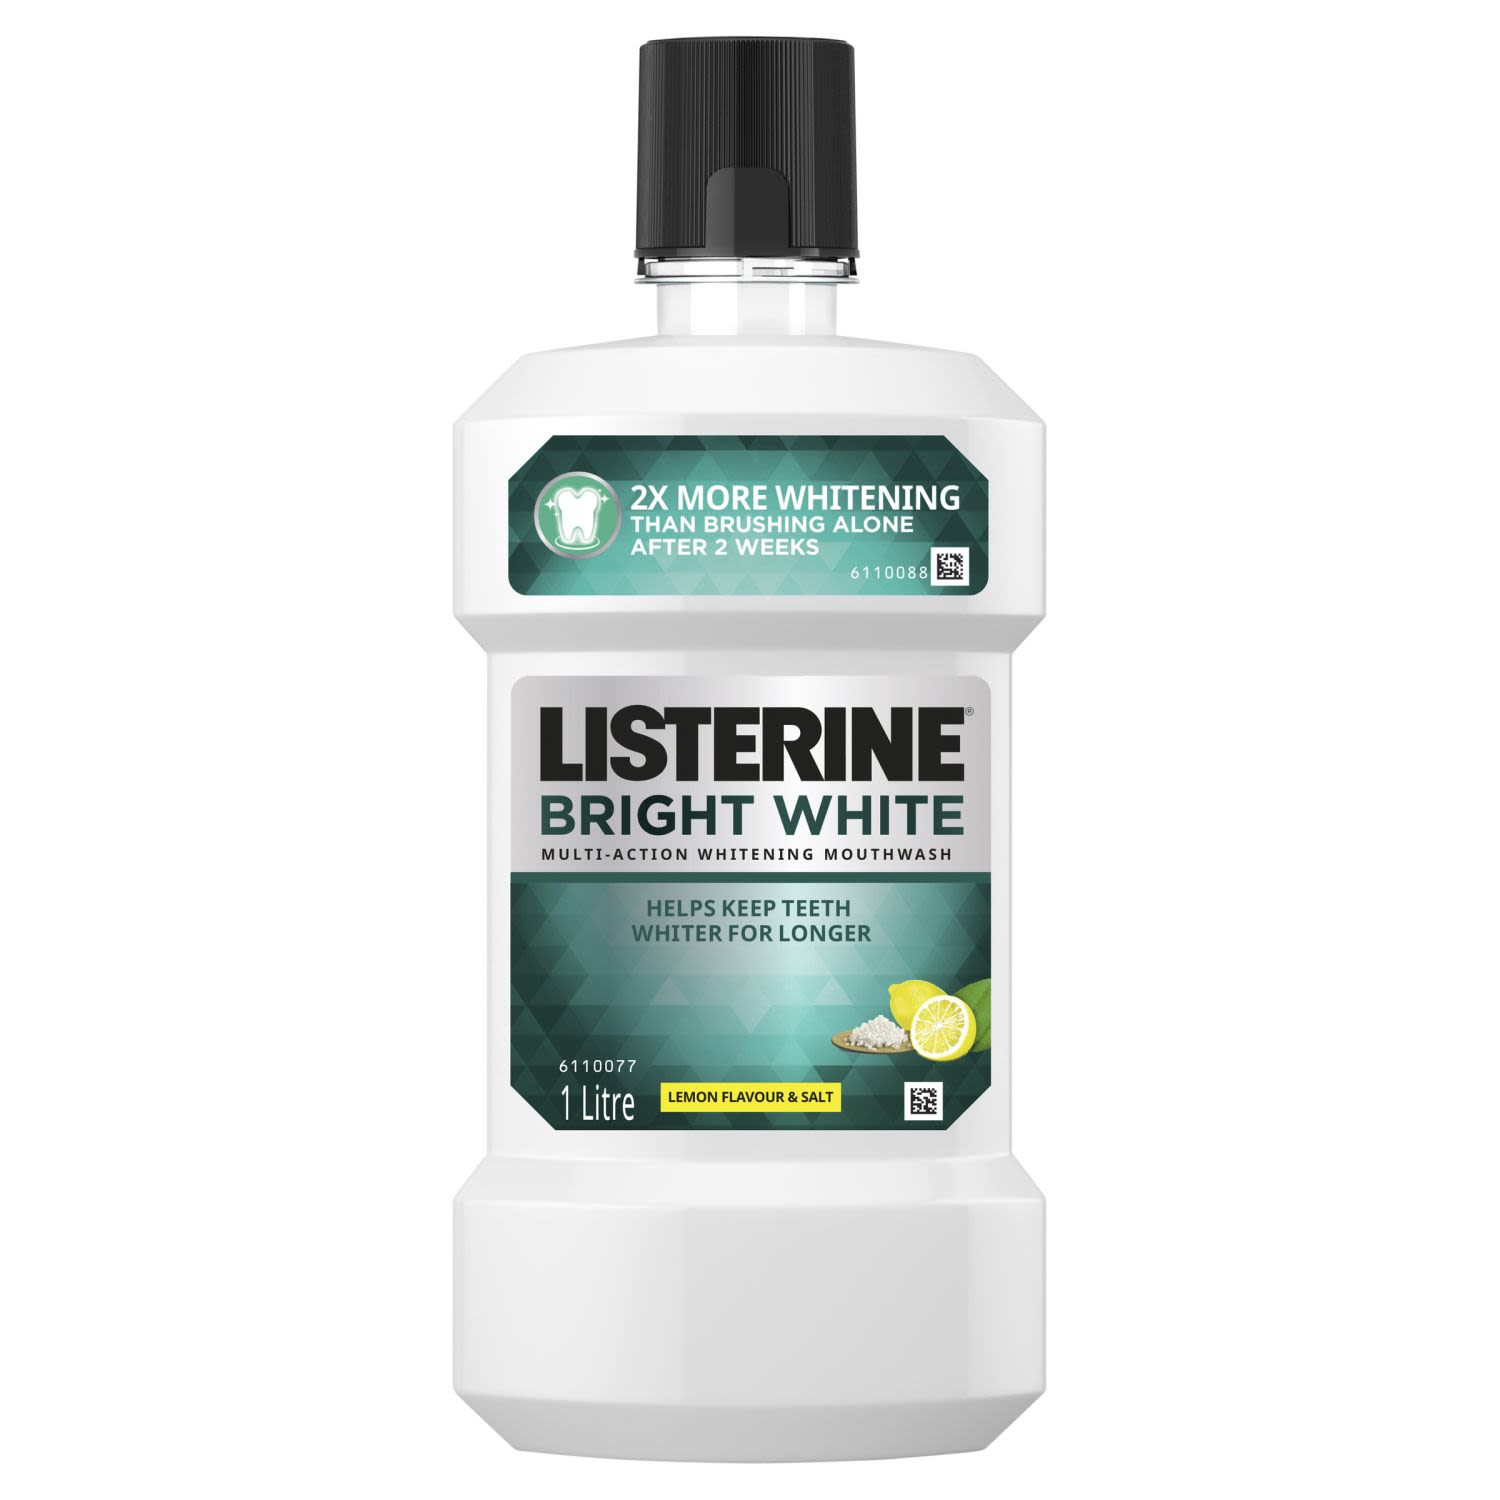 Listerine Bright White Multi-Action Whitening Mouthwash, 1 Litre